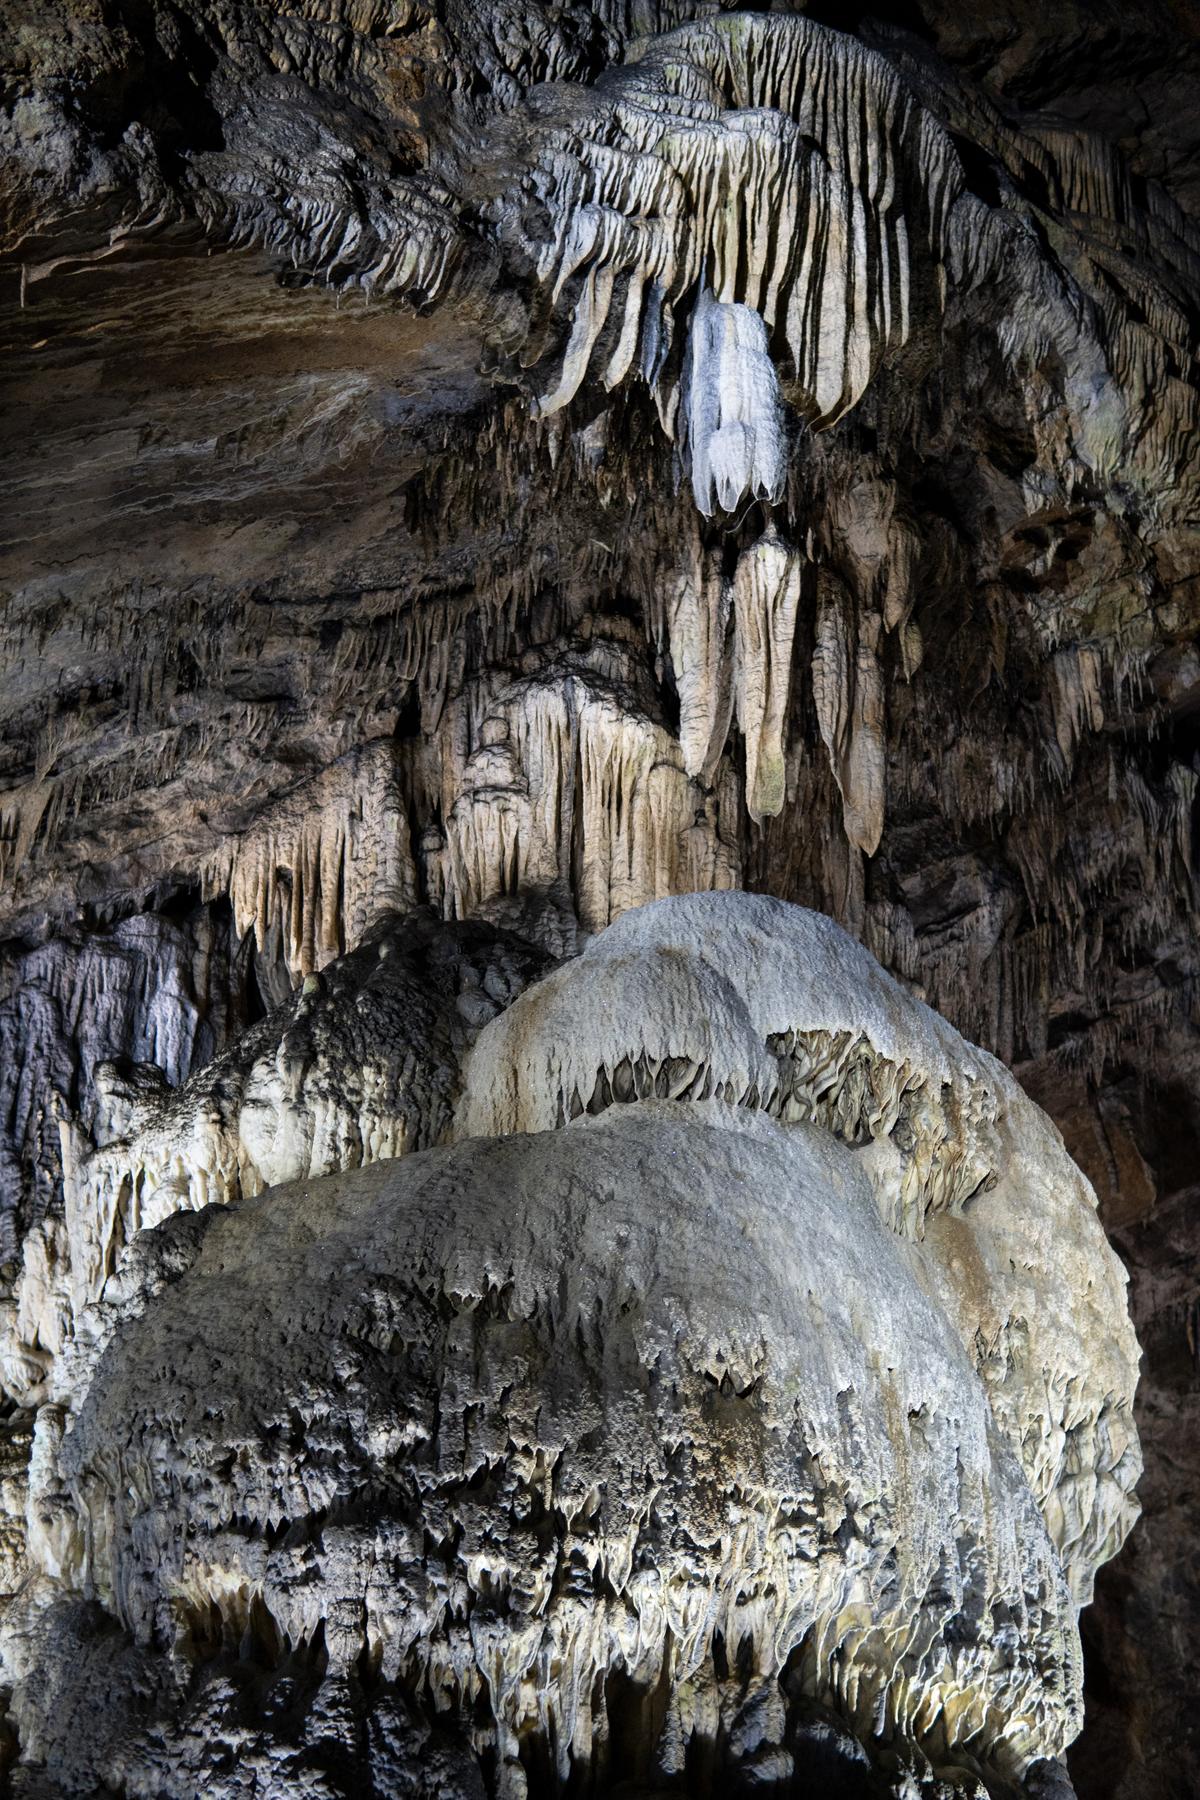 Cayman Crystal Caves-Cayman Islands phot by Hubert Buratynski